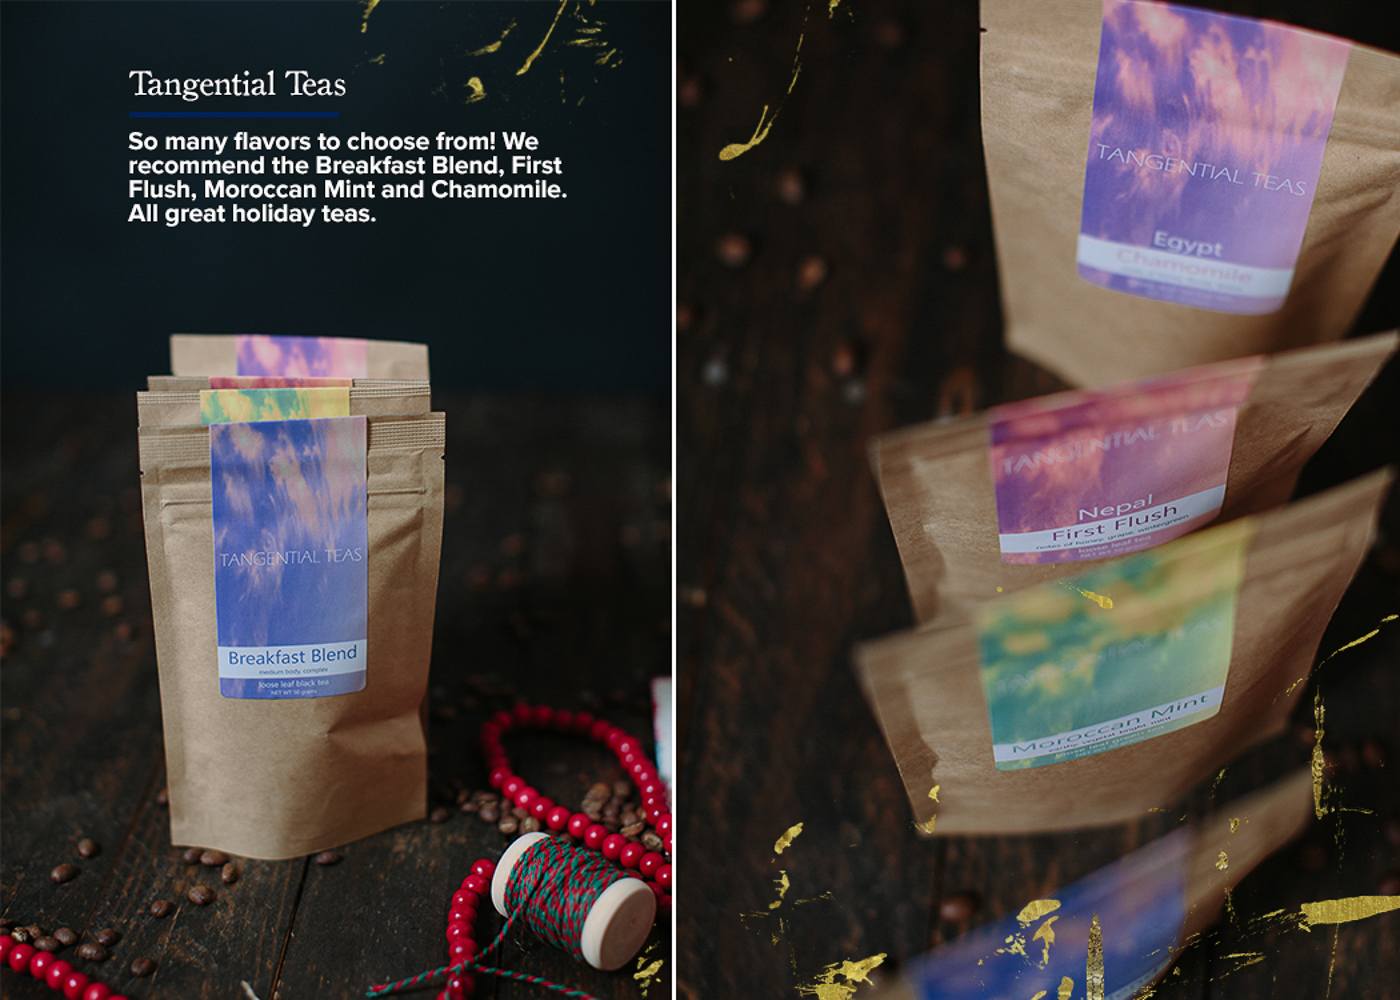 Image of tangential tea bags